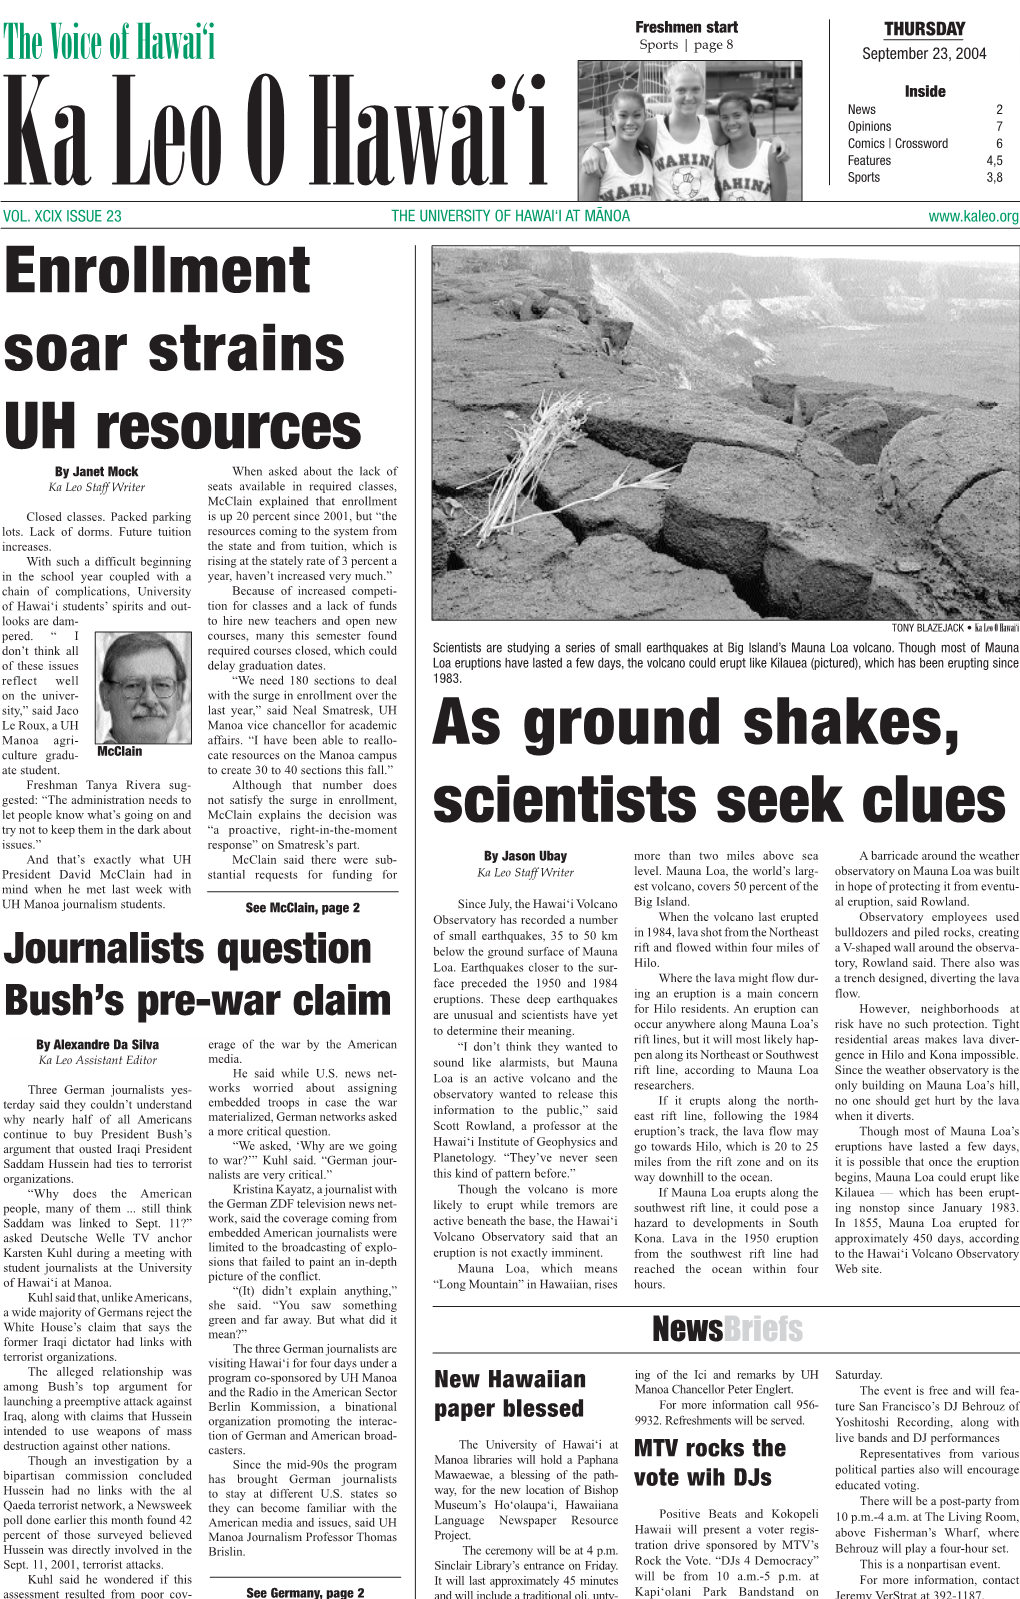 Enrollment Soar Strains UH Resources As Ground Shakes, Scientists Seek